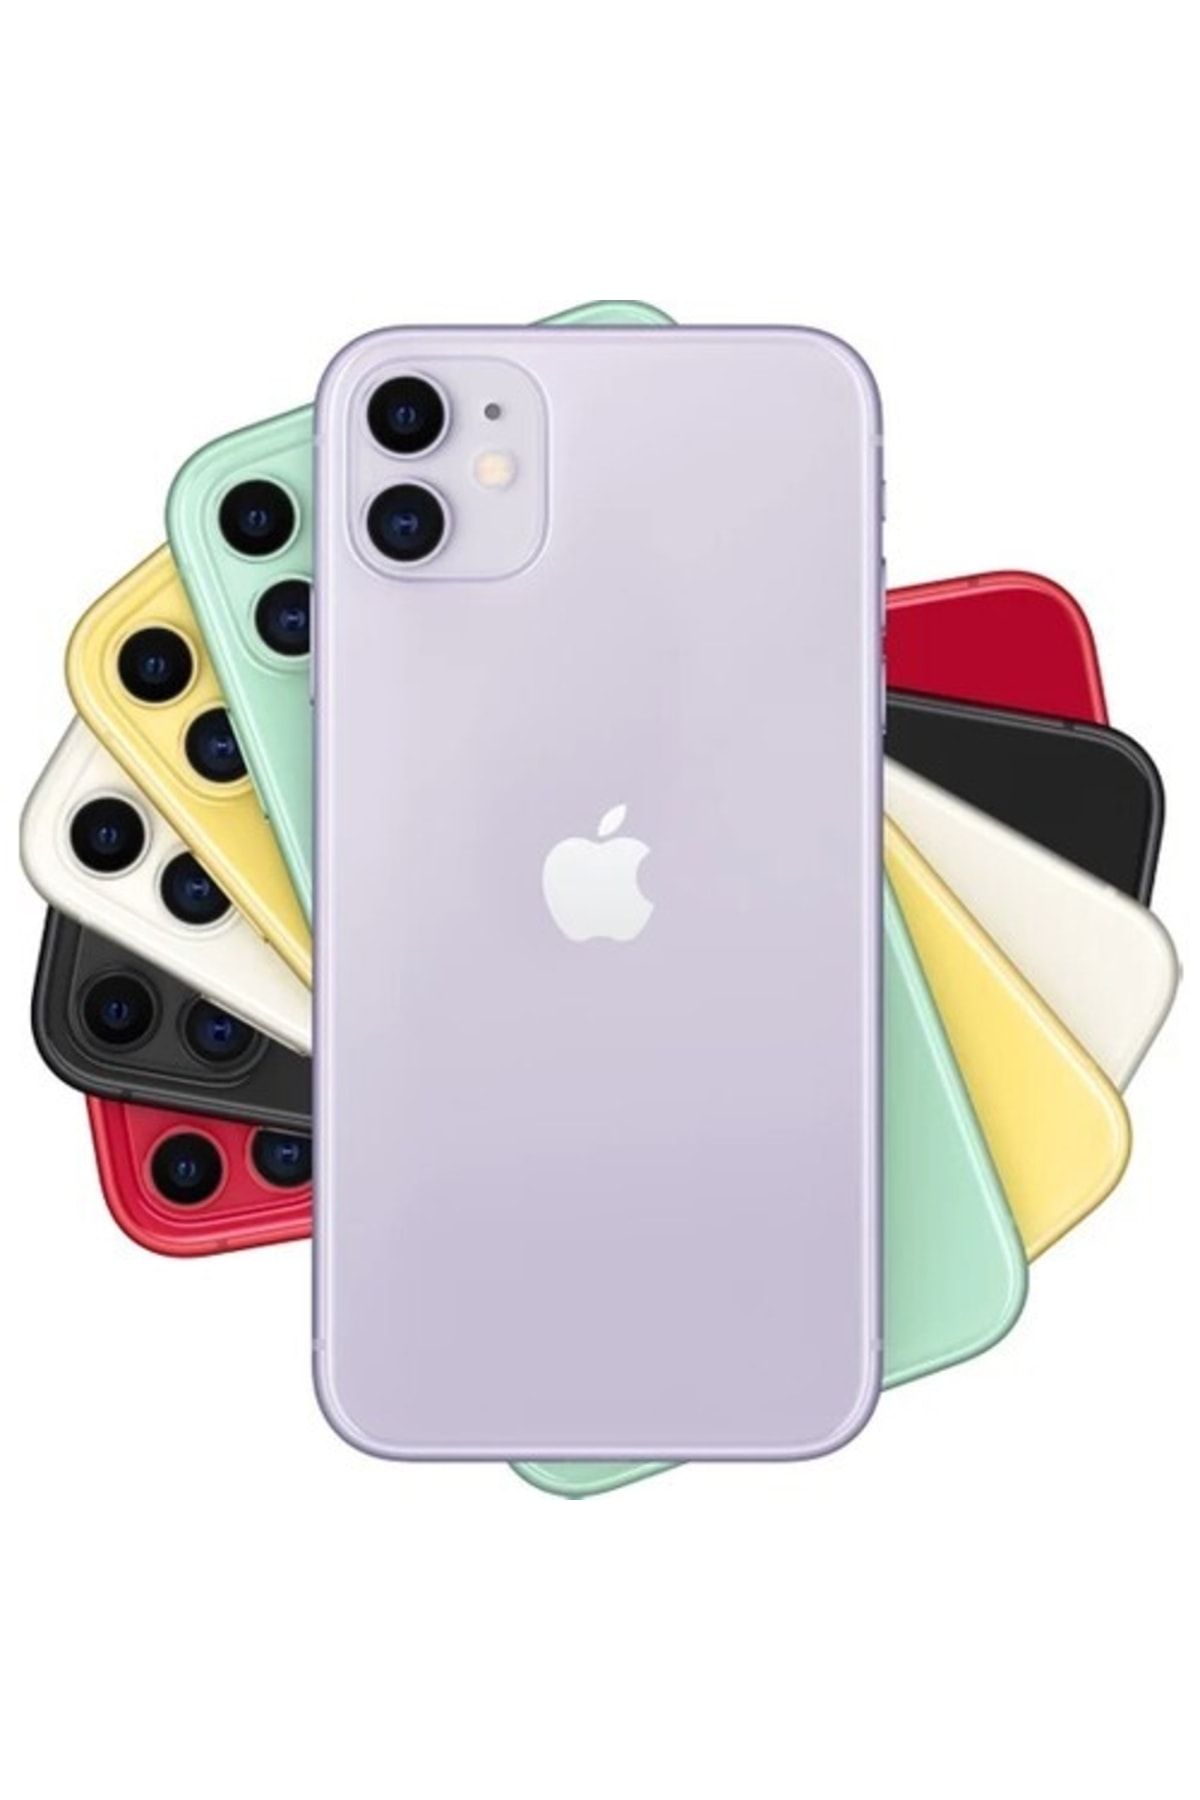 Apple Yenilenmiş iPhone 11 Purple 64 GB B Kalite (12 Ay Garantili)